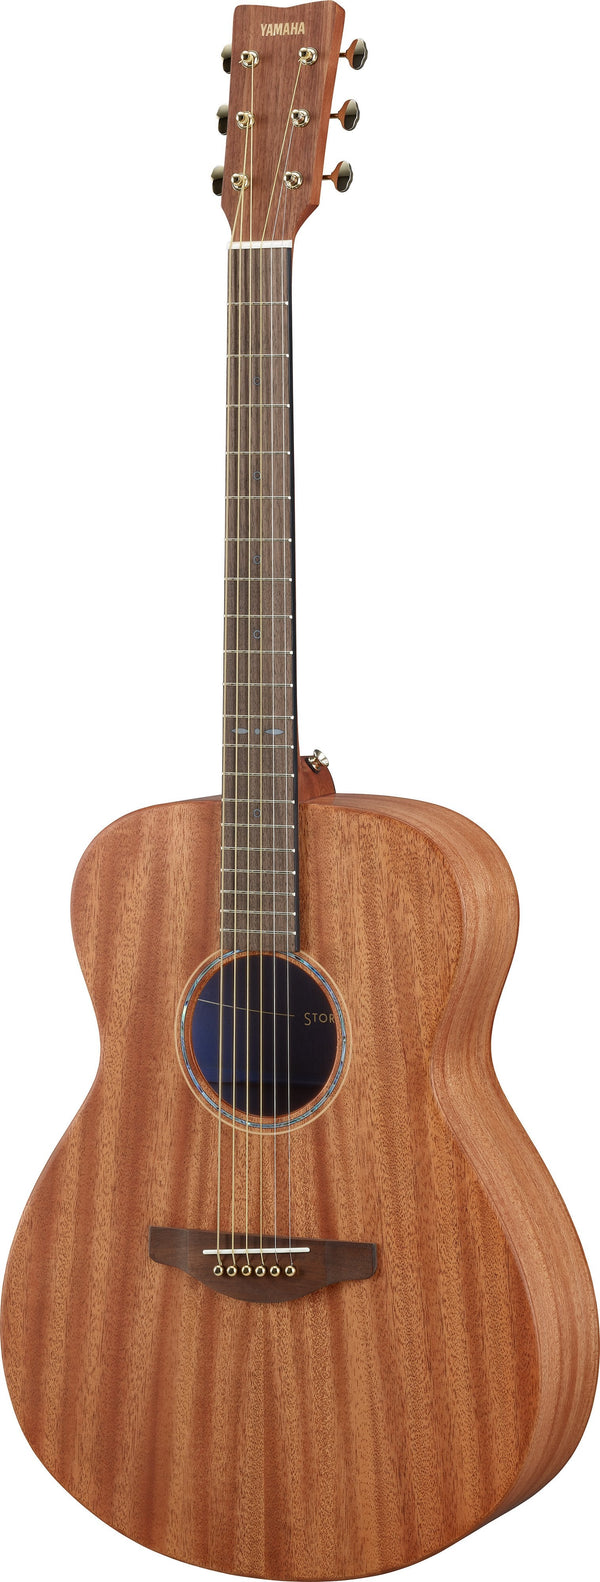 Yamaha Storia II Acoustic Guitar